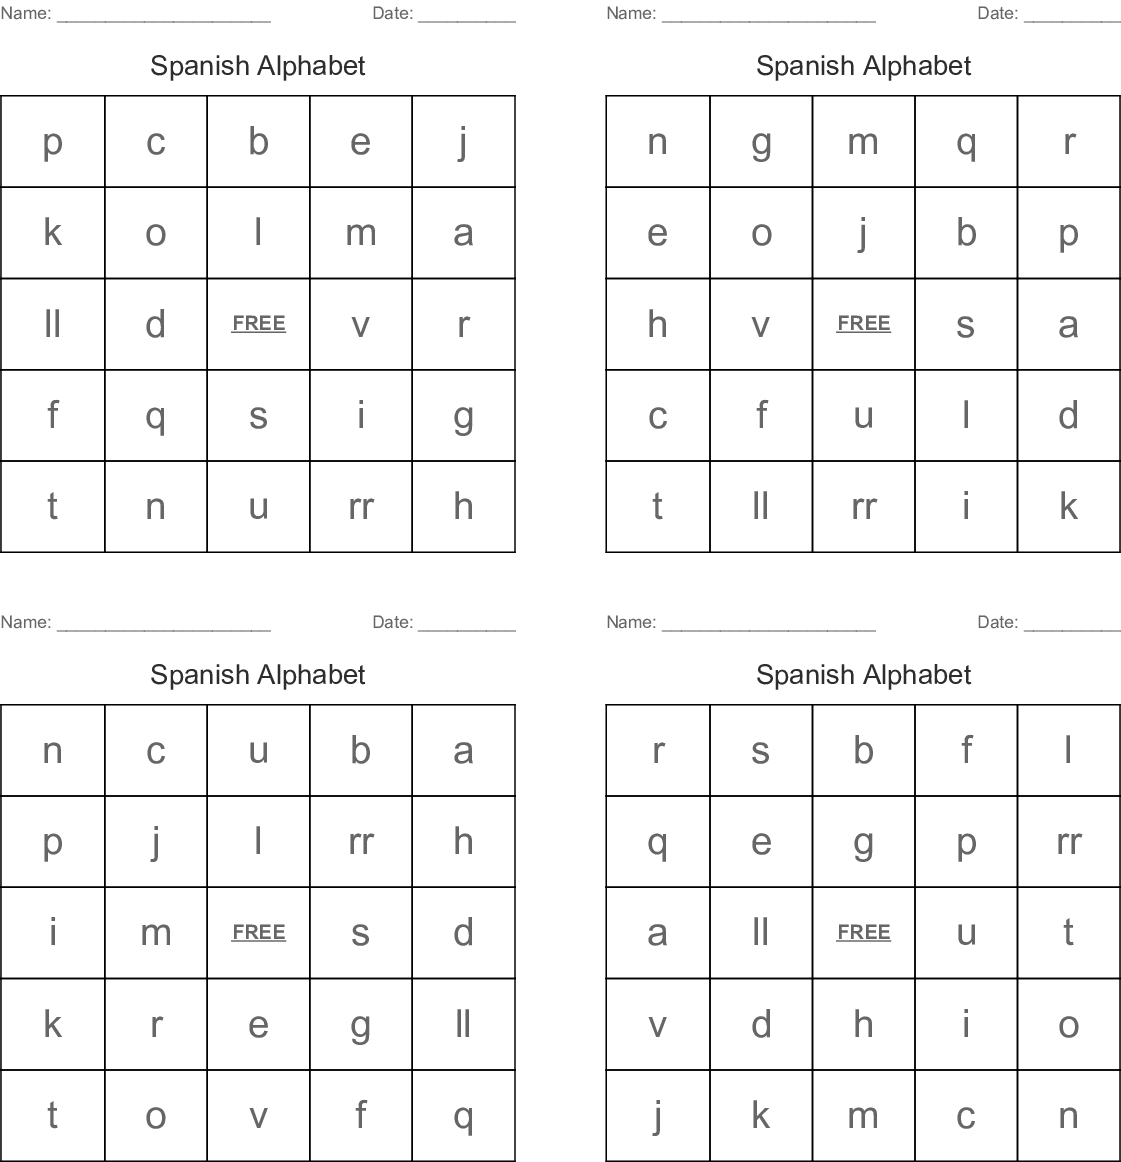 Spanish Alphabet Bingo Cards - Wordmint